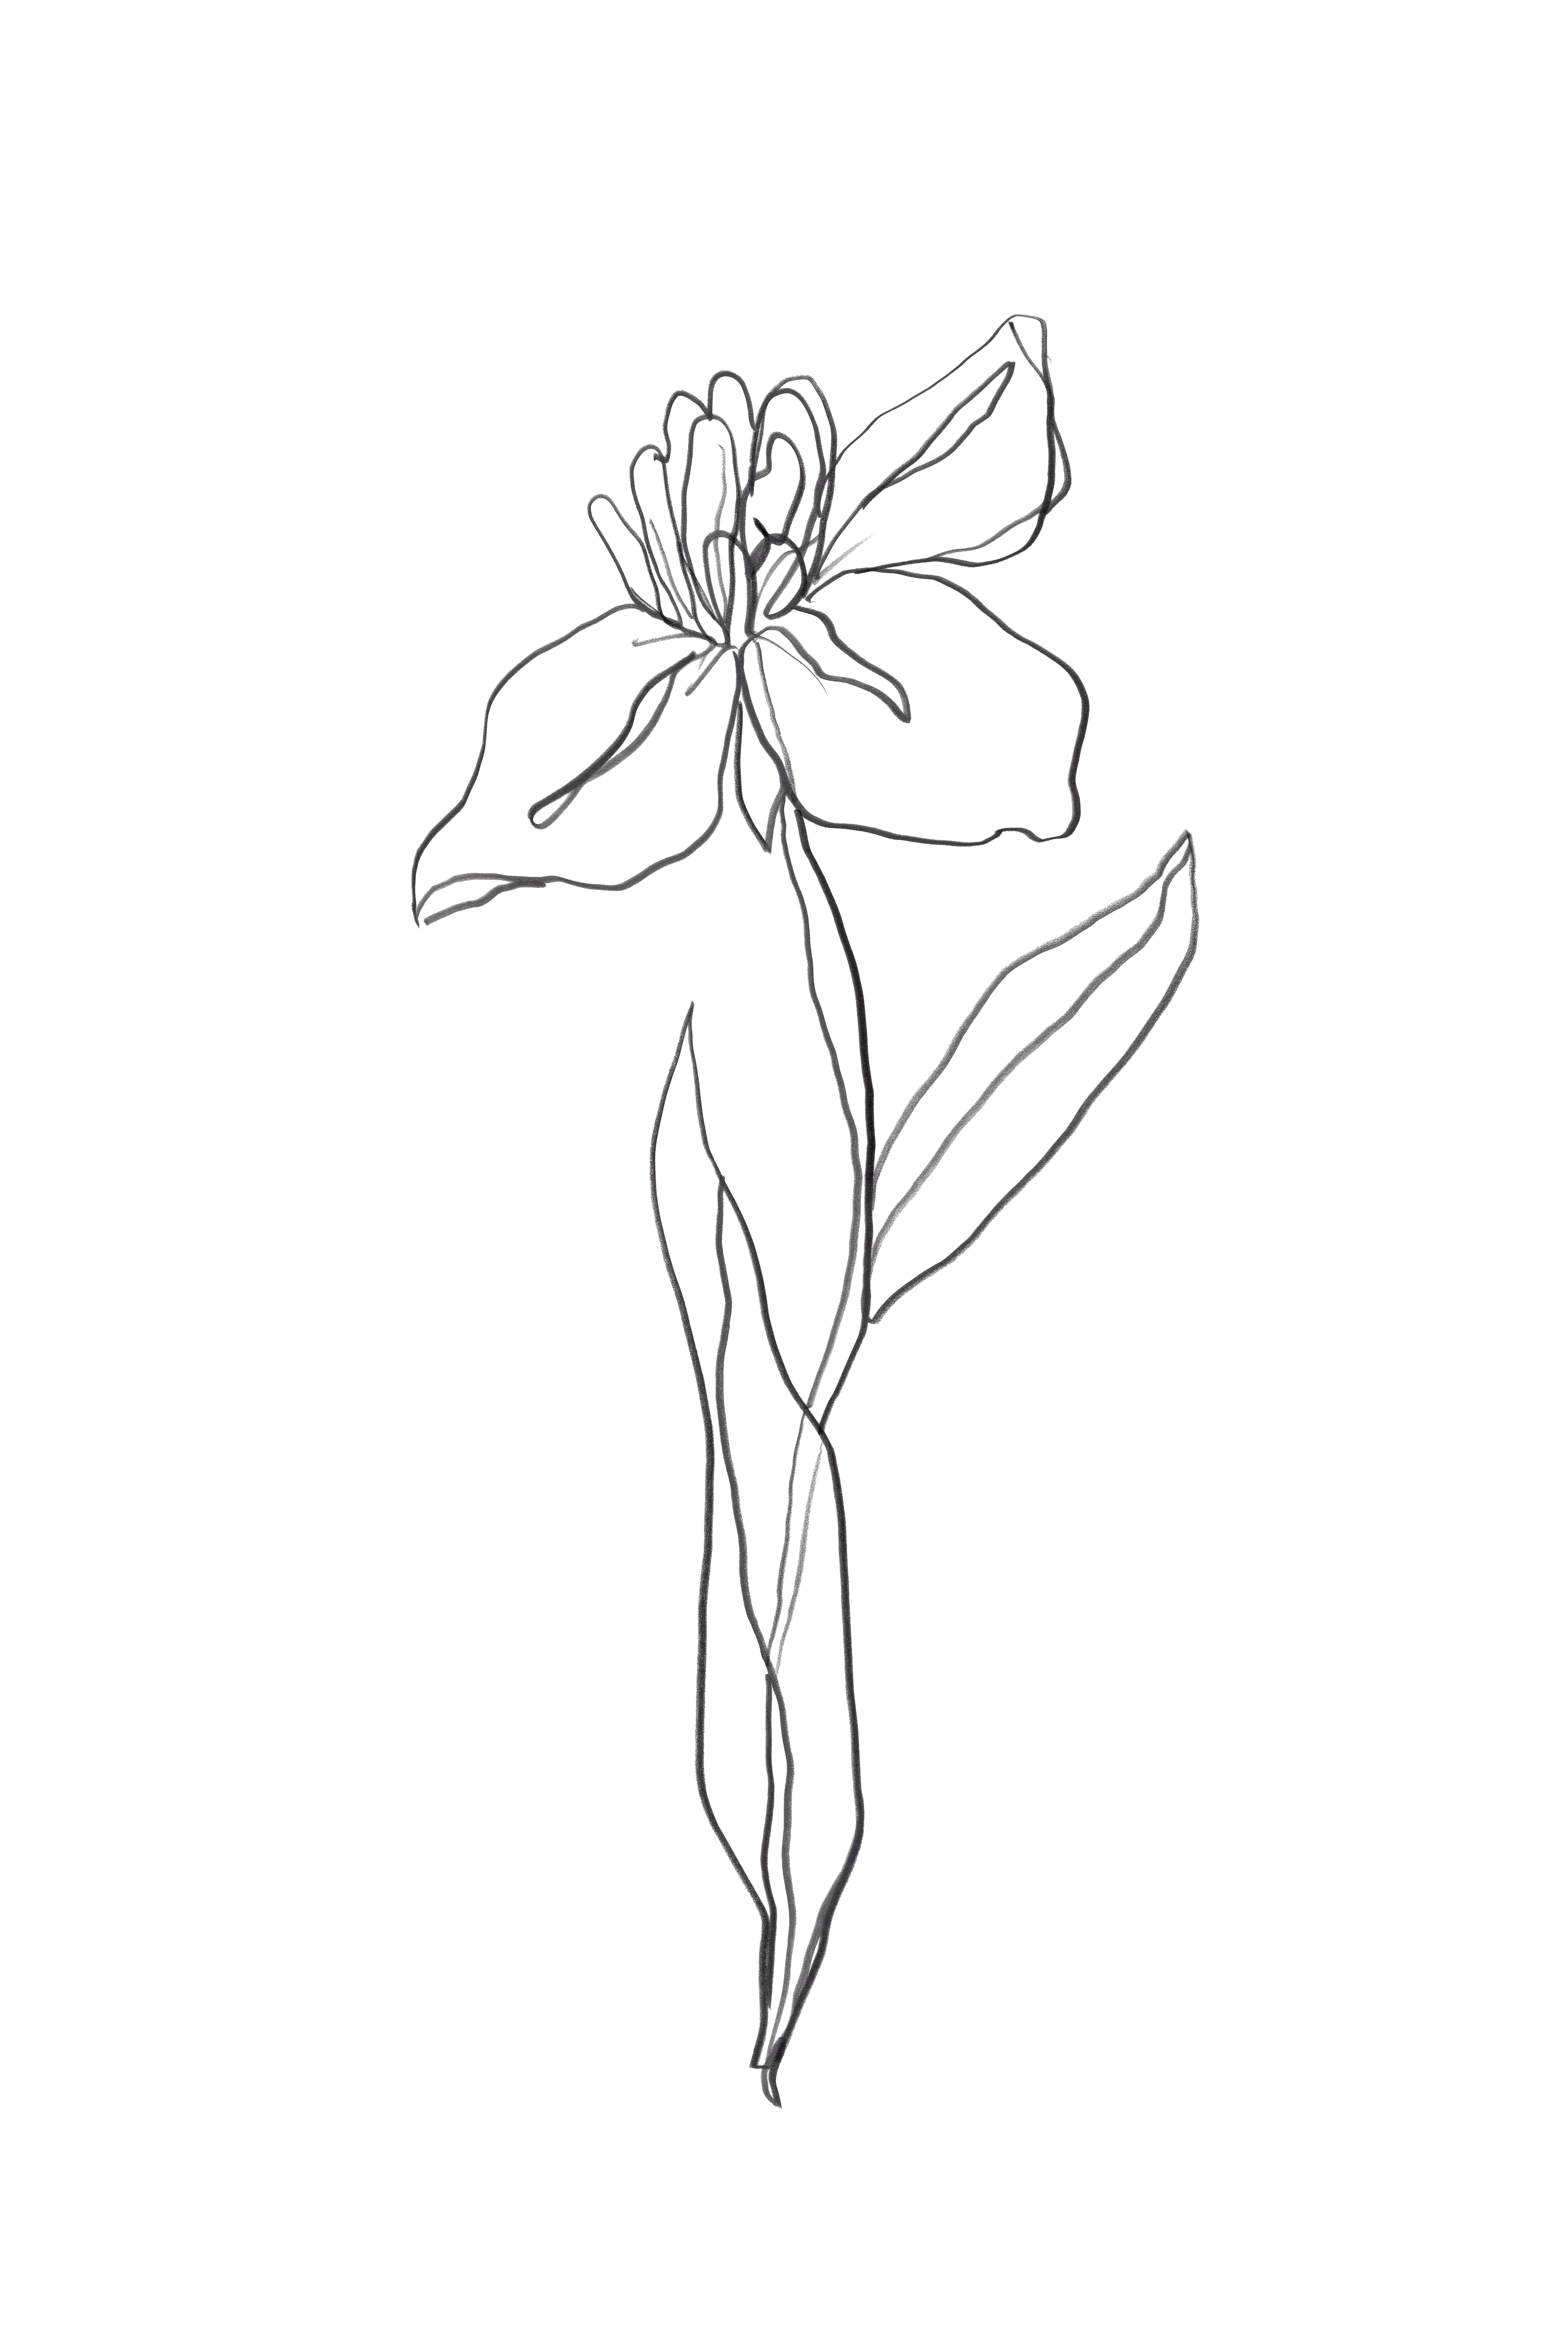 Minimalist Single Line Drawing of a Daffodil